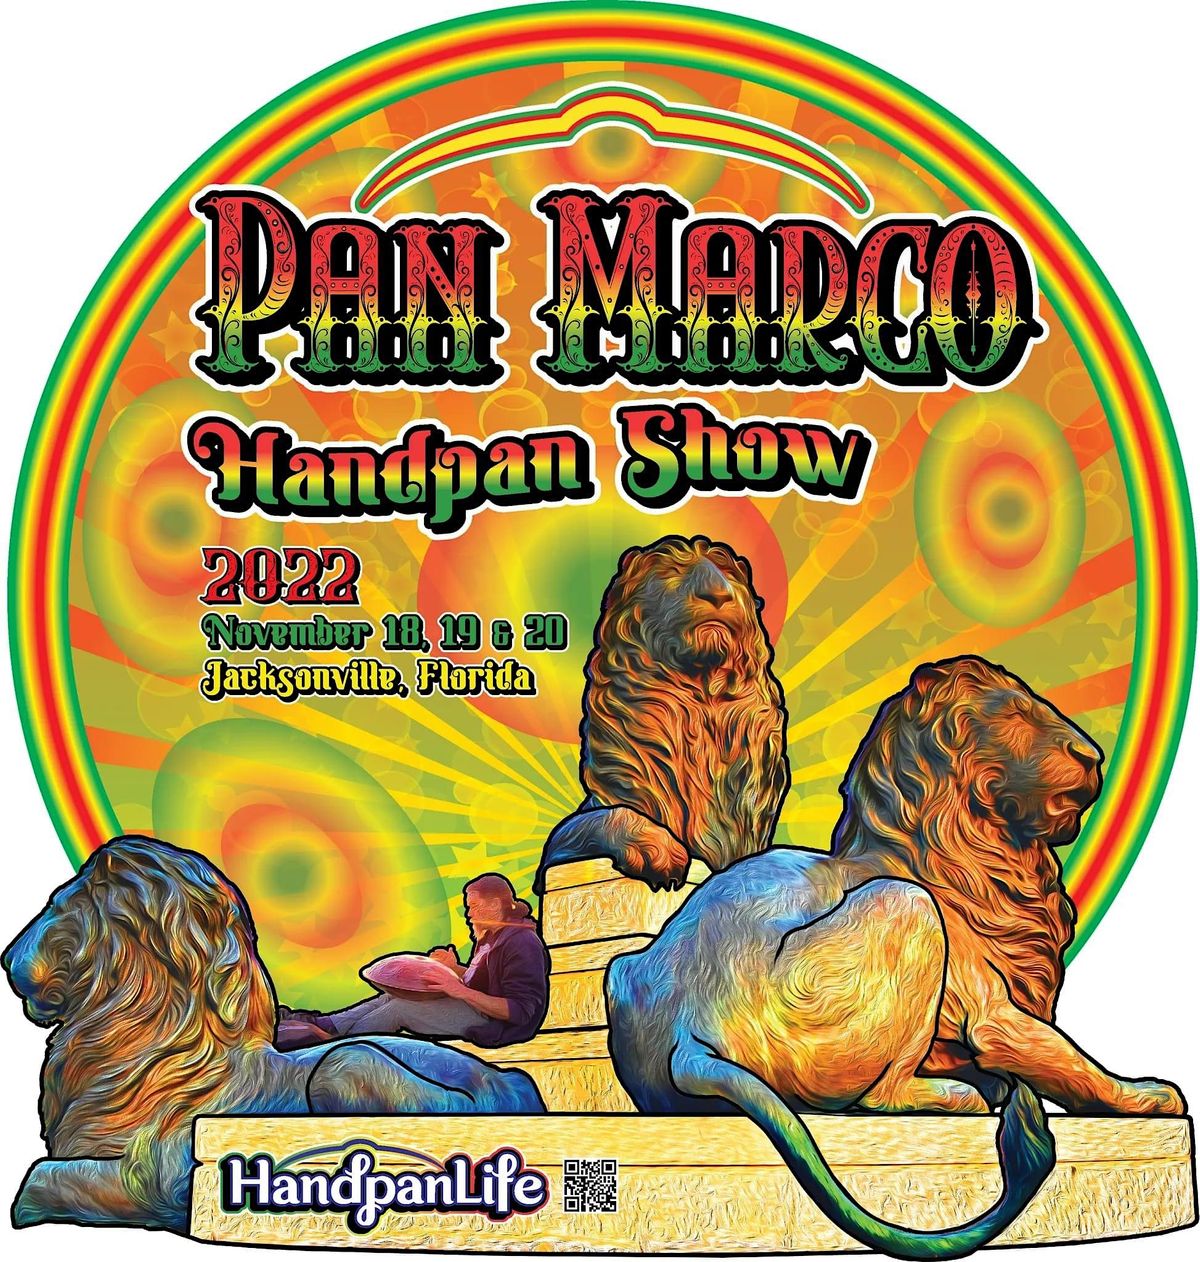 Pan Marco \u201822- Saturday Trade show